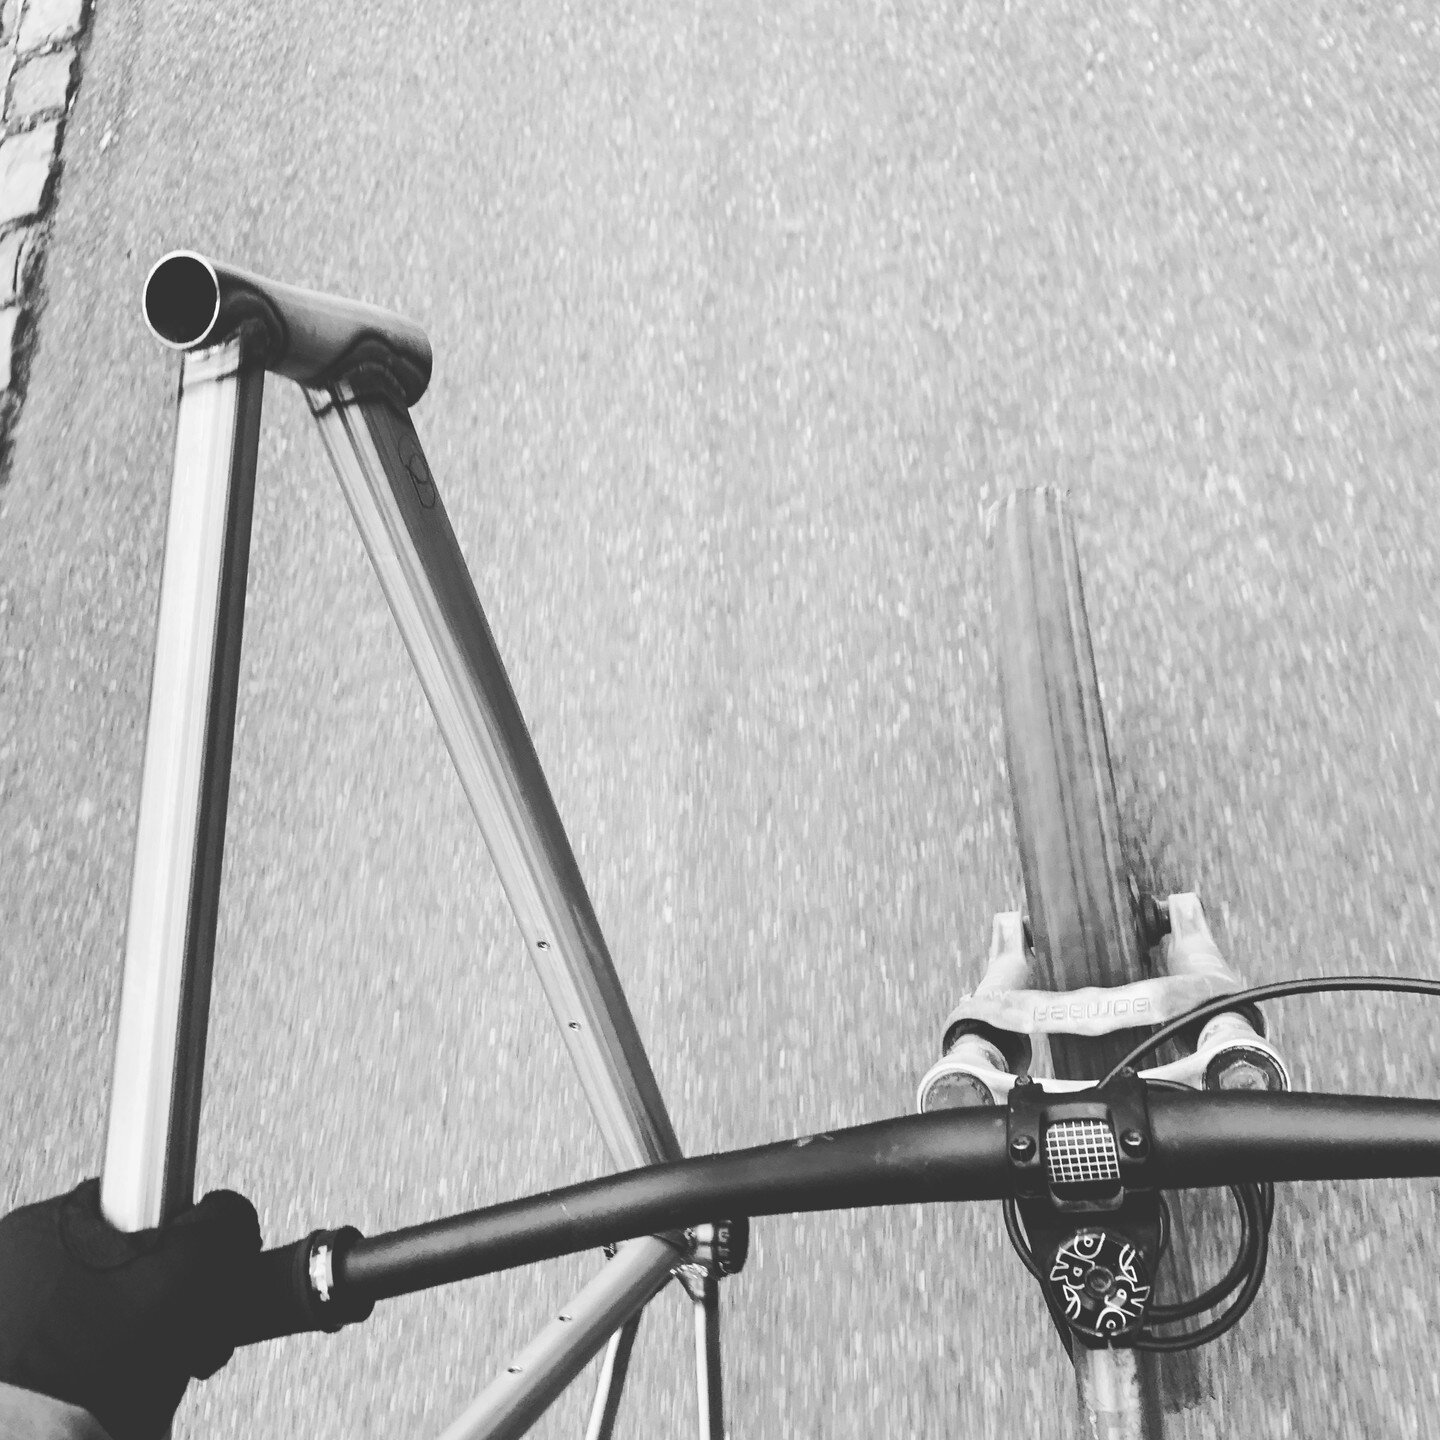 Ready to paint!

@gravel_bike_world
@gravel_bikes.cc
@gravel_86
@columbus_official
@gravelbiking.ch

#BRUTcustomcycles
#handmadeinswitzerland 
#handmadebikes 
#madeinswitzerland
#handmade
#gravel_86
#gravel_bike_world
#columbussteel
#columbusmax
#col